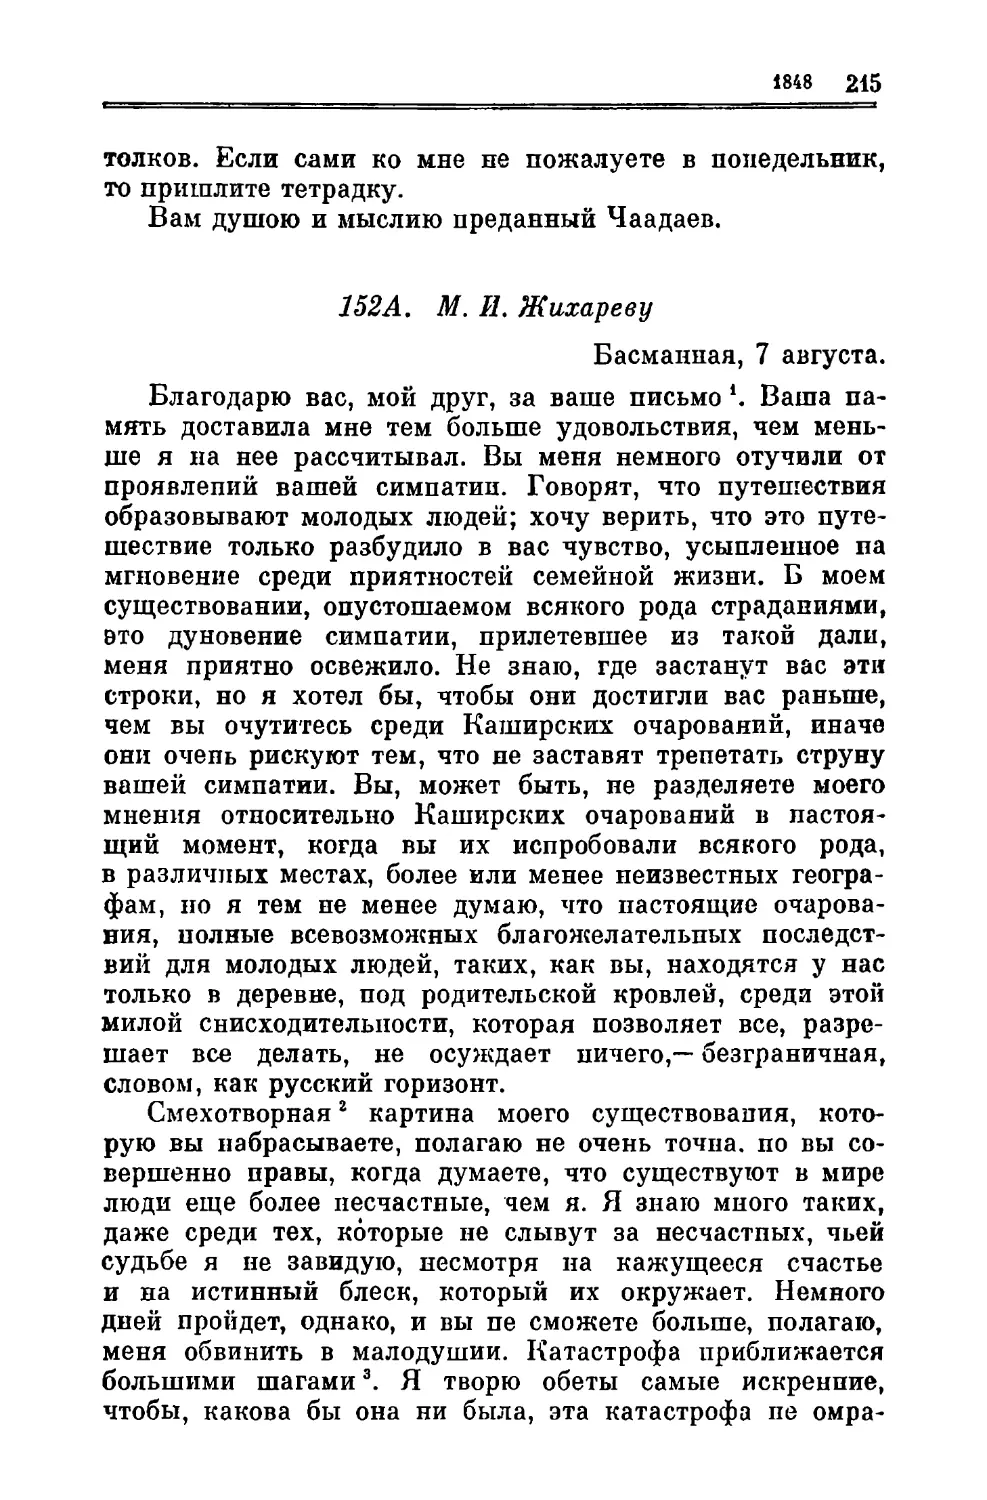 152А. Жихареву M.И. 7.VIII